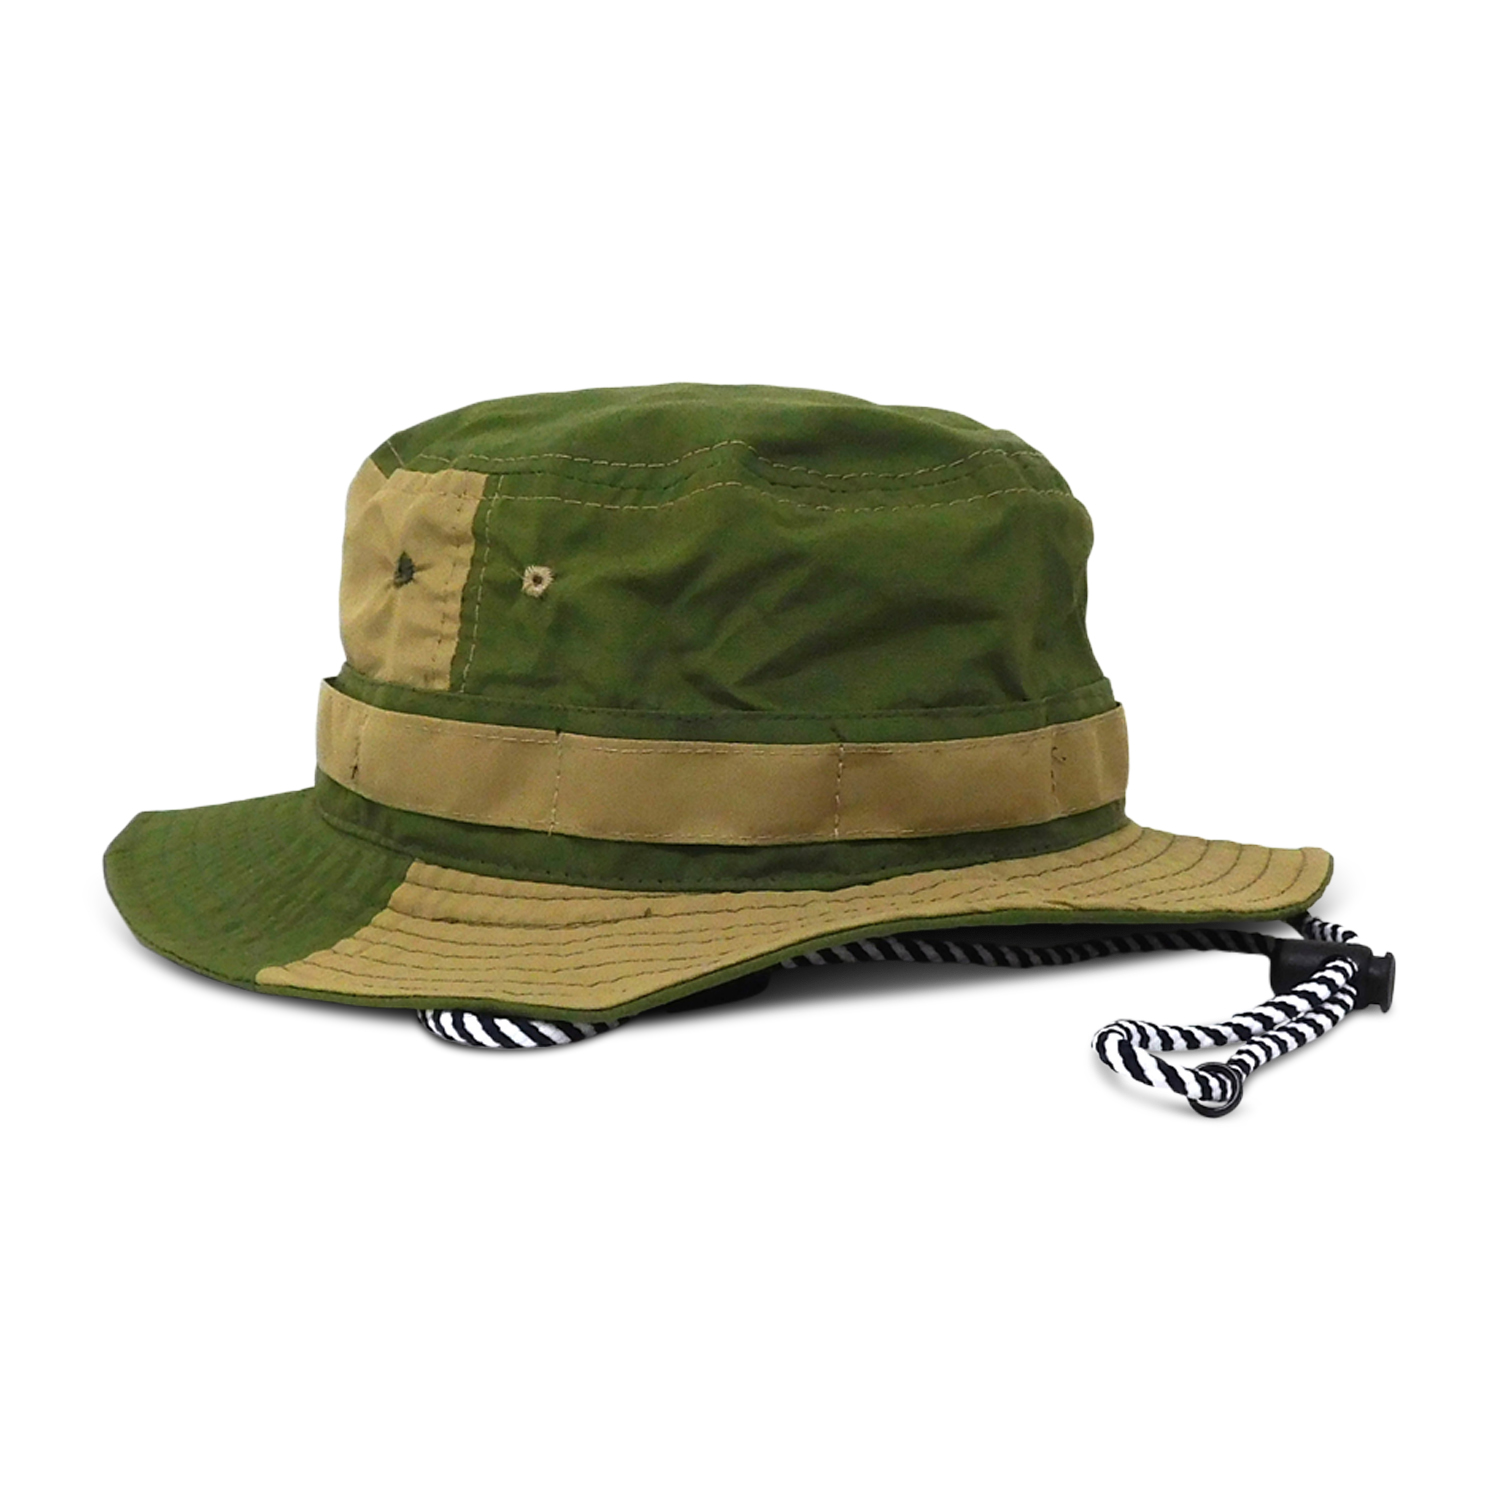 Panama Jack Kids Beach Hat - Lightweight, UPF 50+ Sun Protection | eBay